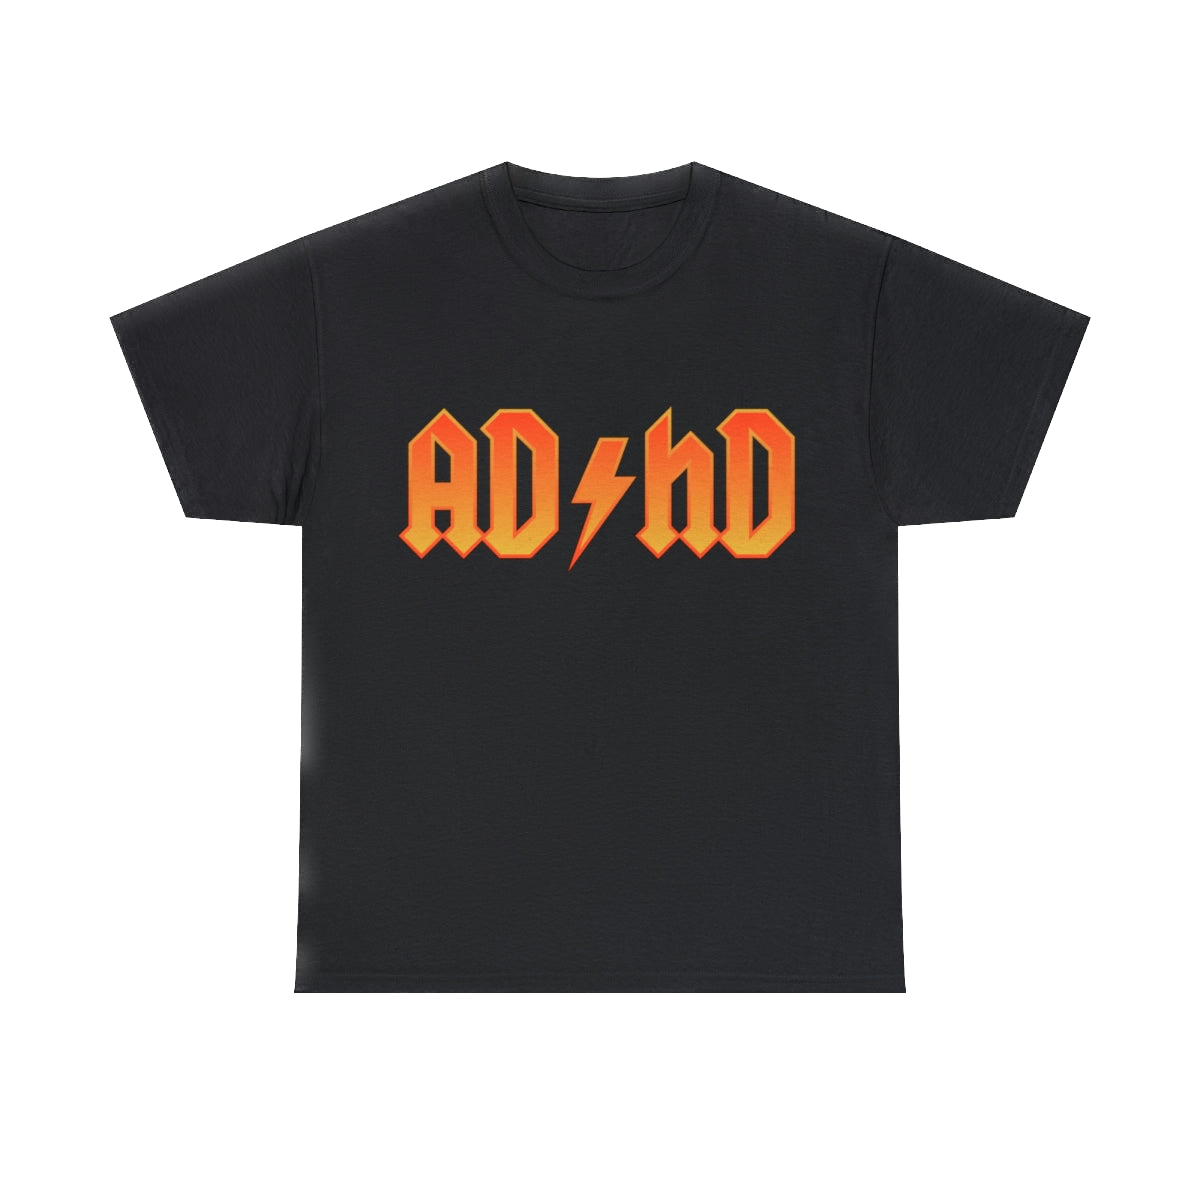 AD/HD logo shirt - 6 Logo Colours!